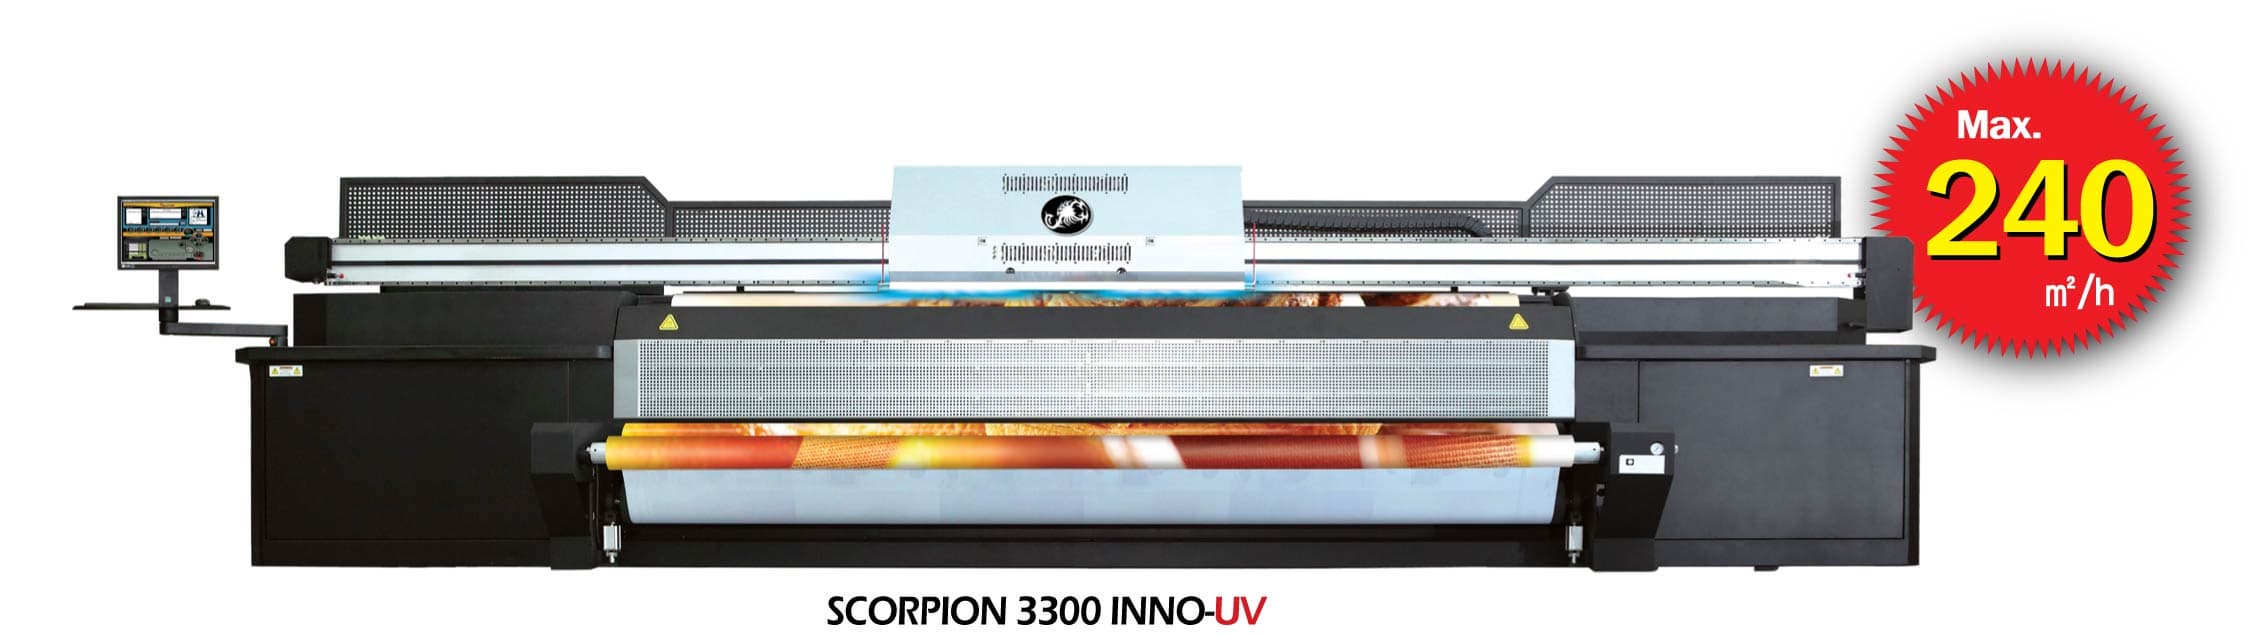 Scorpion3300 INNO-UV